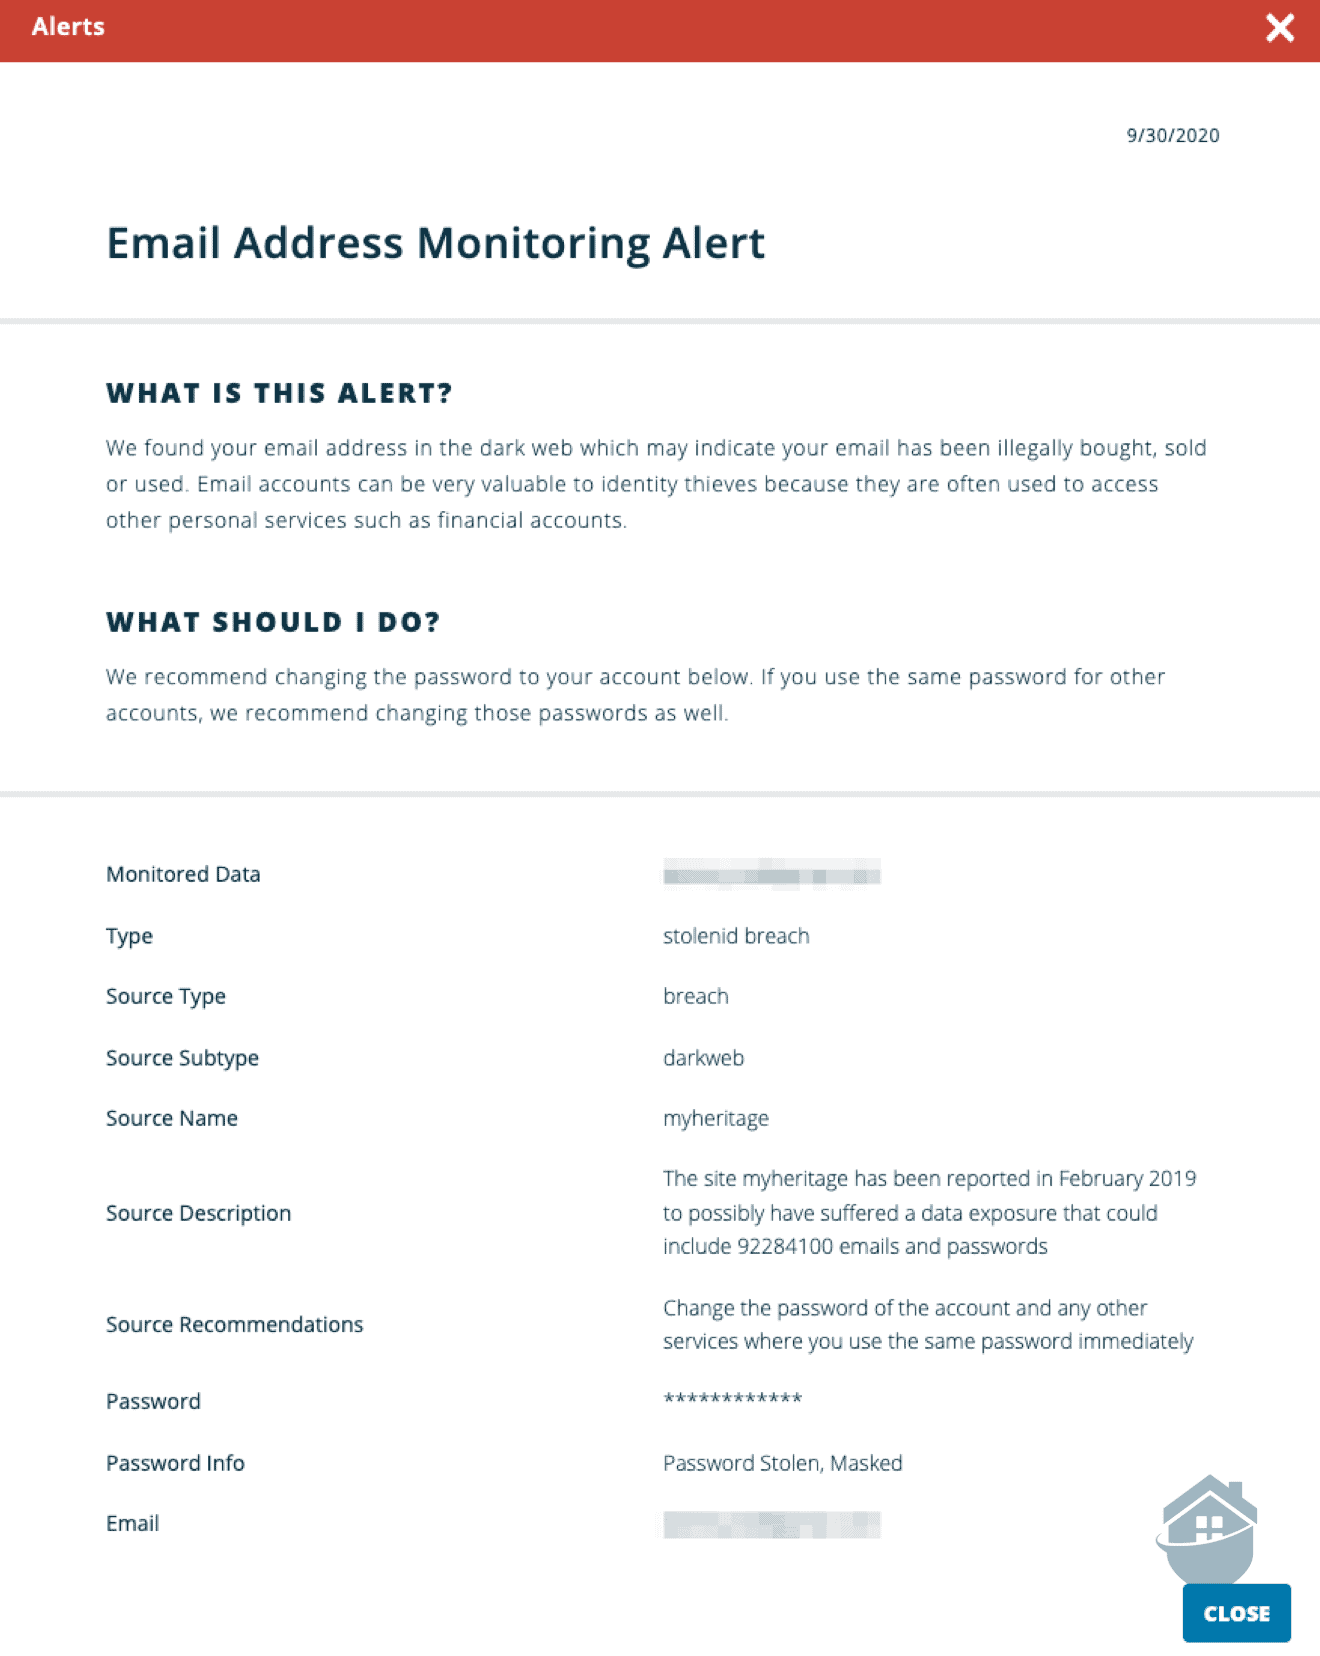 IdentityForce Email Address Monitoring Alert